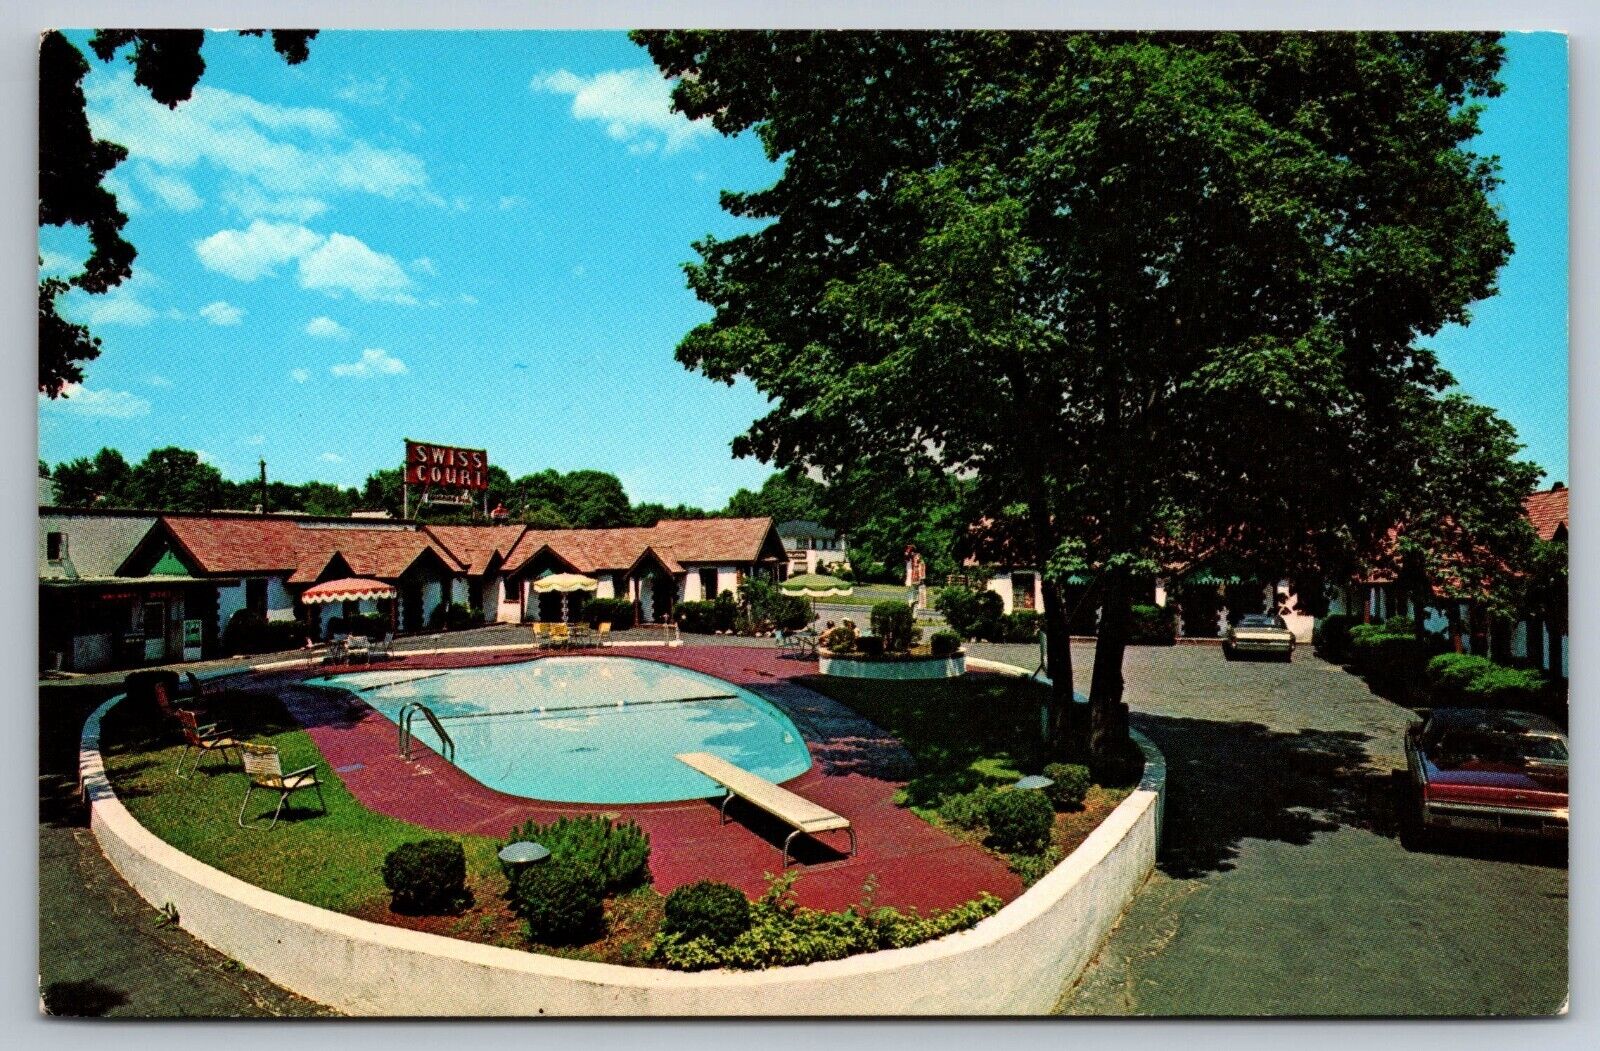 Swiss Court Motel Upper Saddle River New Jersey chrome Postcard